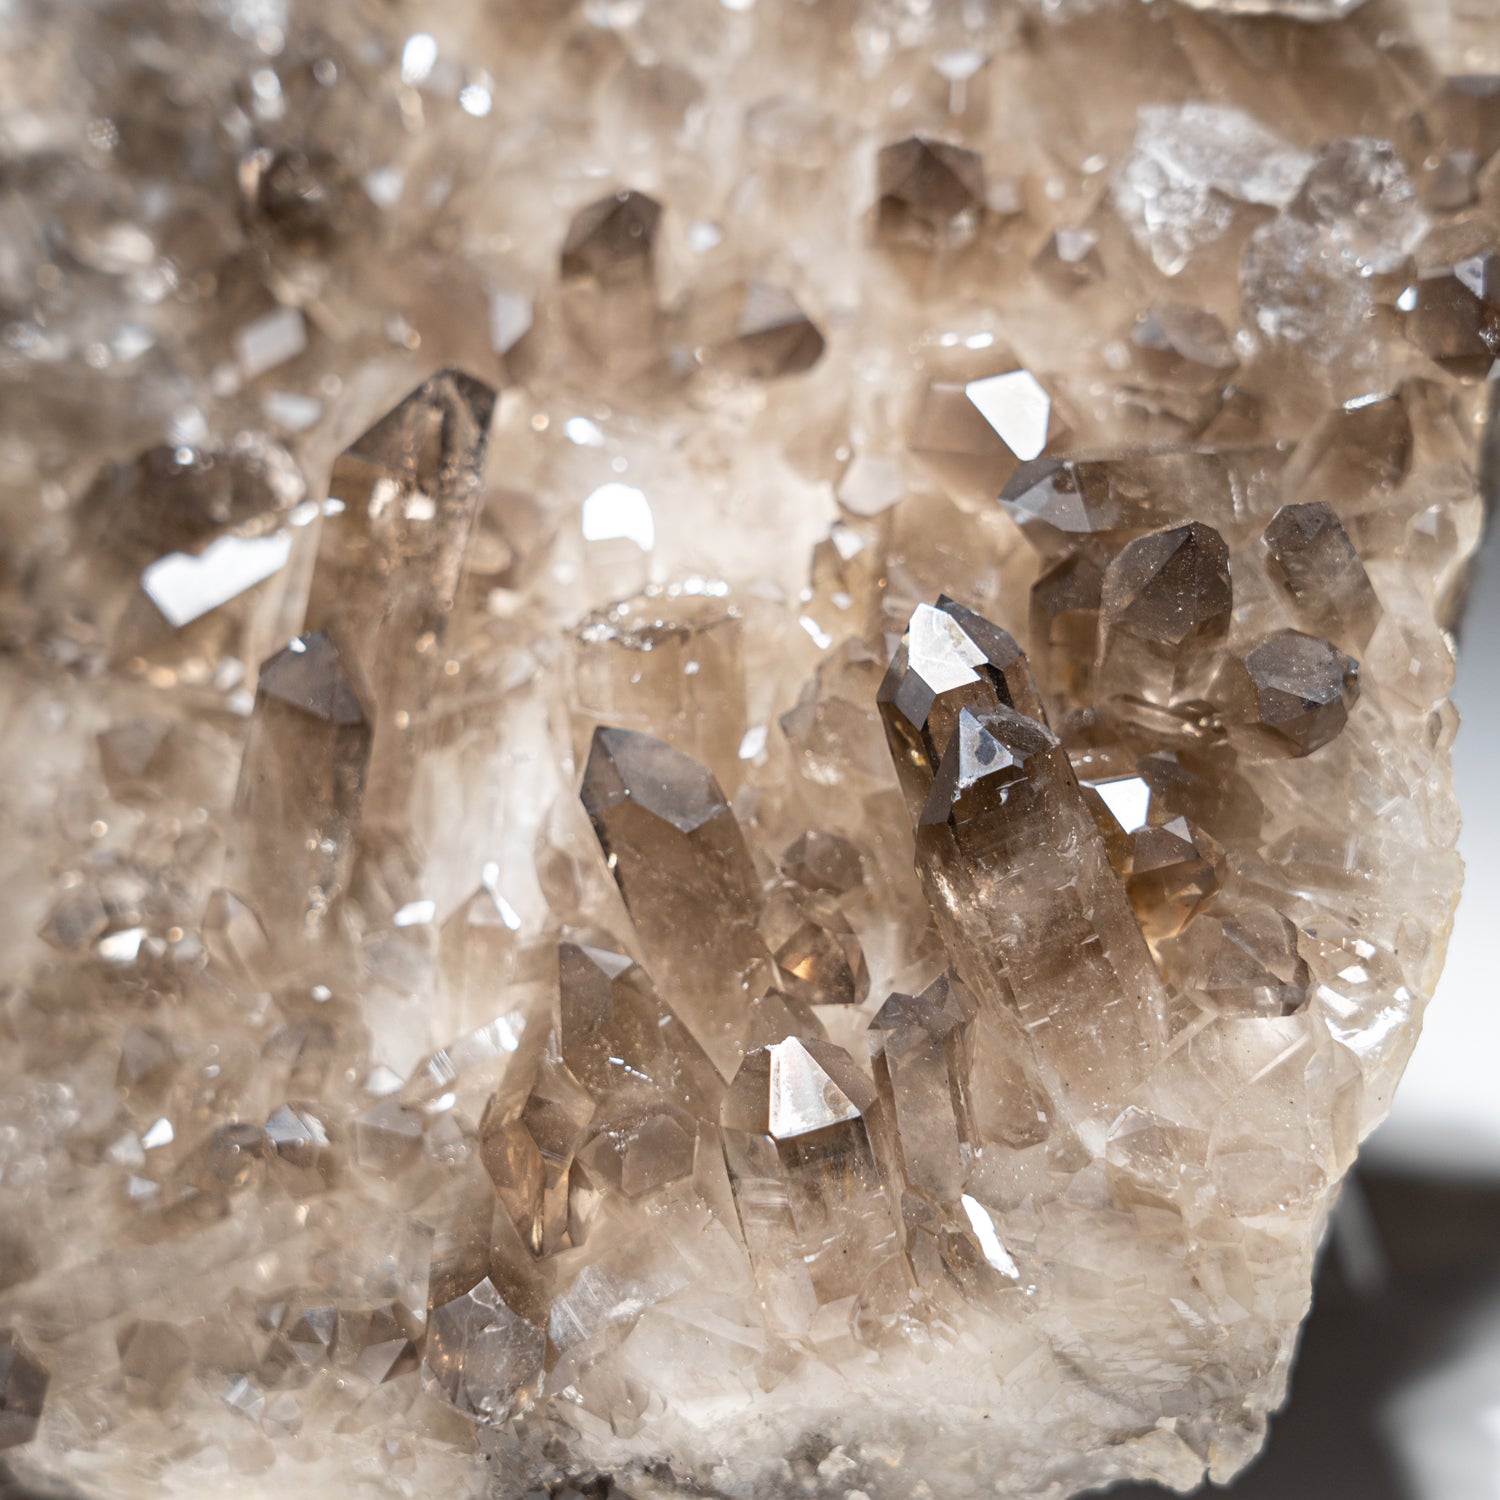 Genuine Smoky Quartz Crystal Cluster from Mina Gerais, Brazil (3.3 lbs)